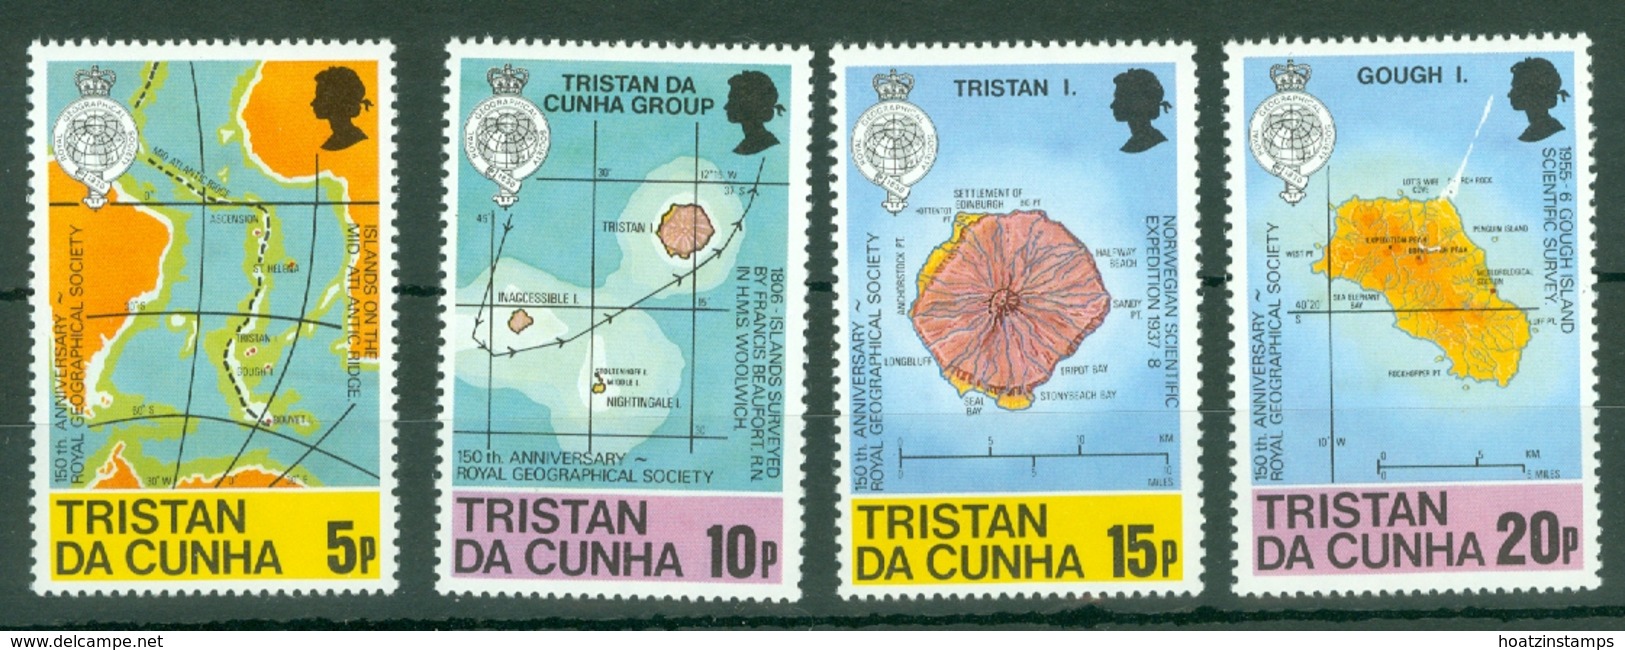 Tristan Da Cunha: 1980   150th Anniv Of Royal Geographical Society - Maps   MNH - Tristan Da Cunha